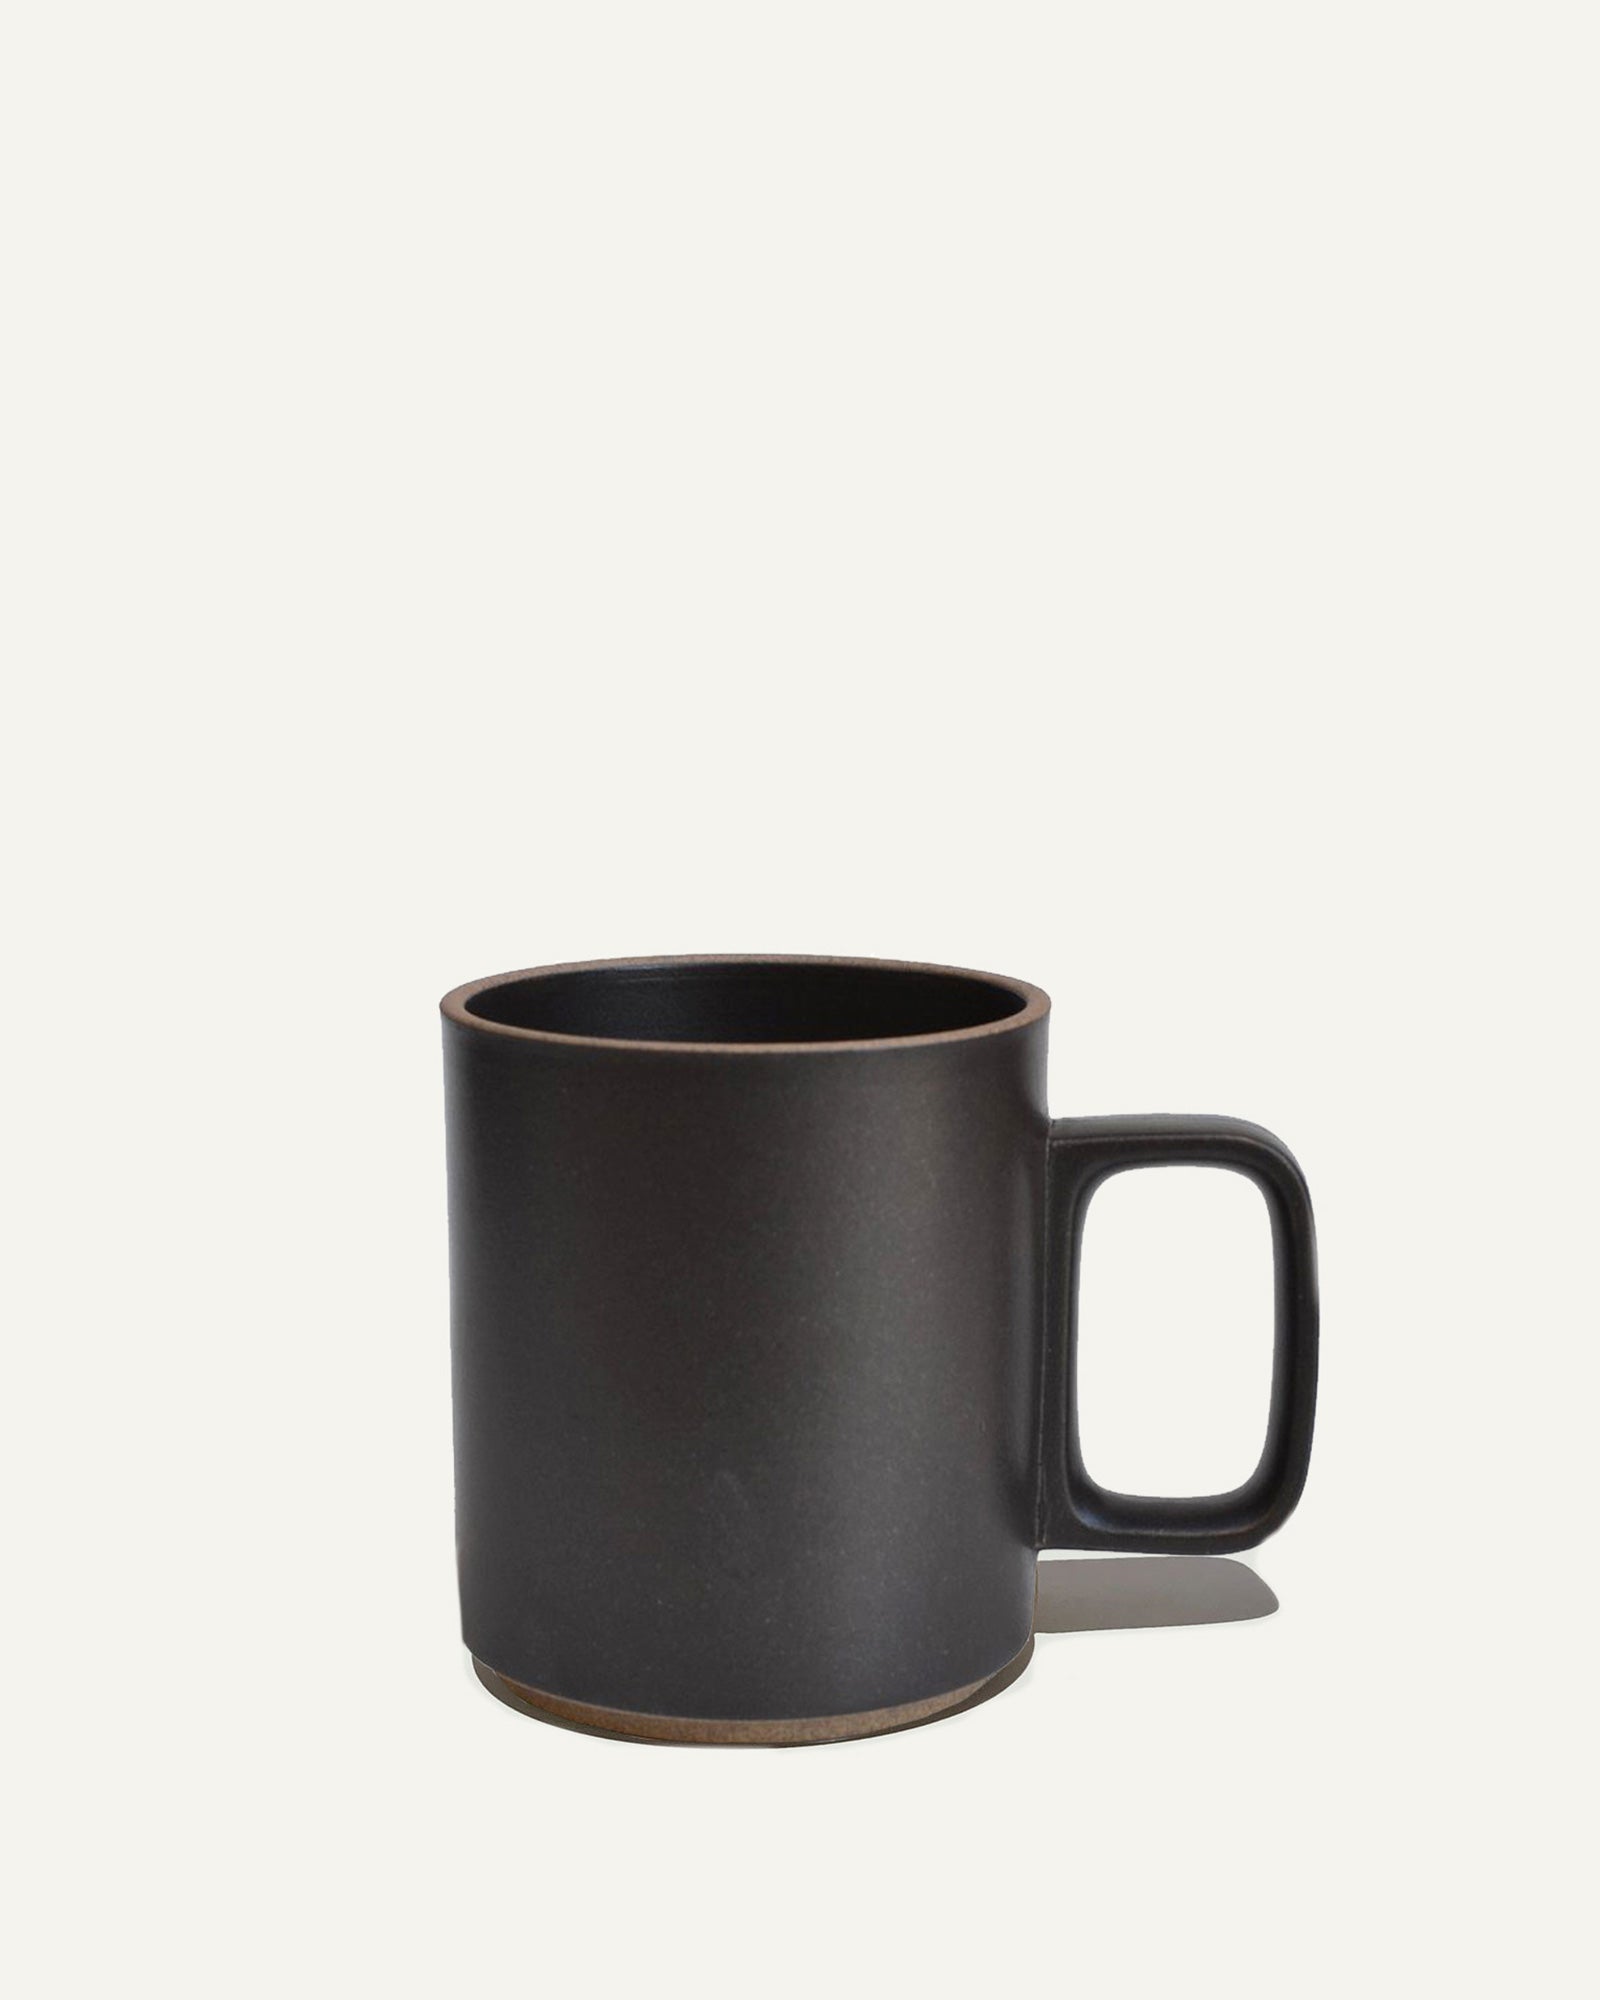 A black ceramic mug by Hasami for Canyon Coffee